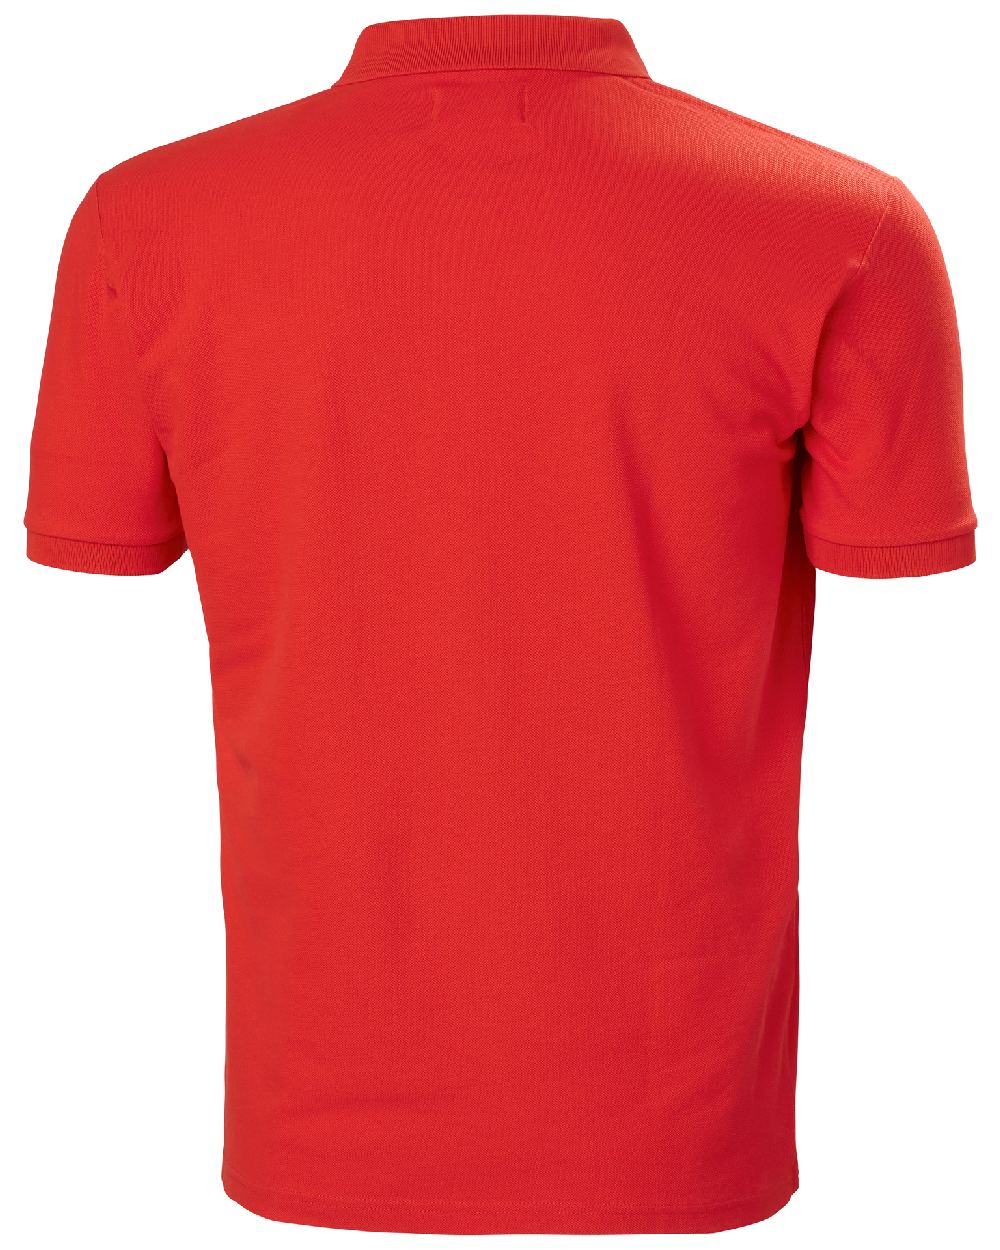 Alert Red coloured Helly Hansen Mens Malcesine Polo T-Shirt on white background 